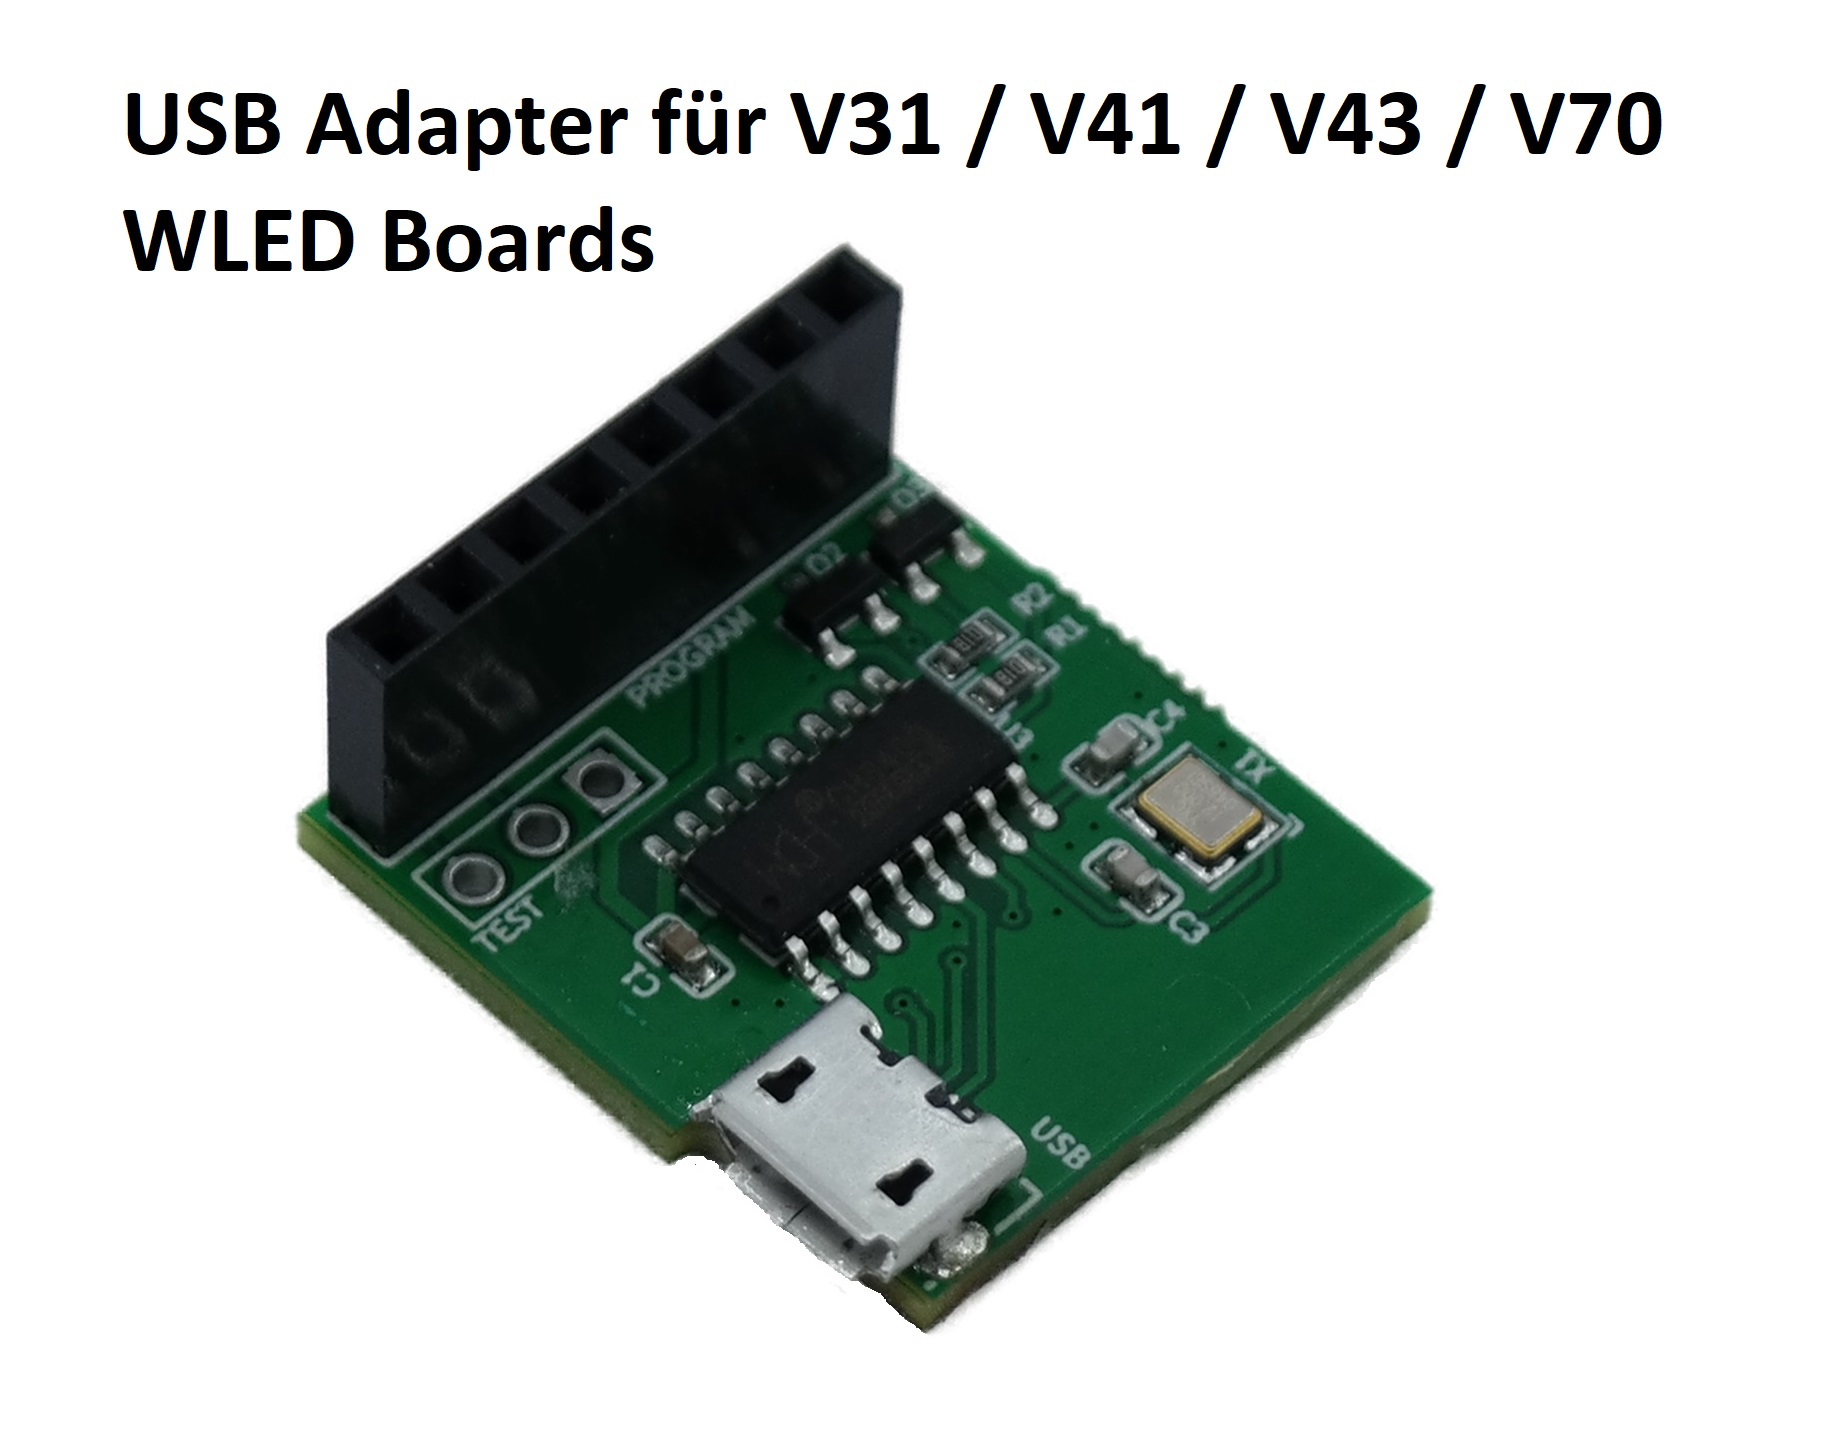 USB Adapter für Programmieren WLED V31/V41/V43/V70 Boards